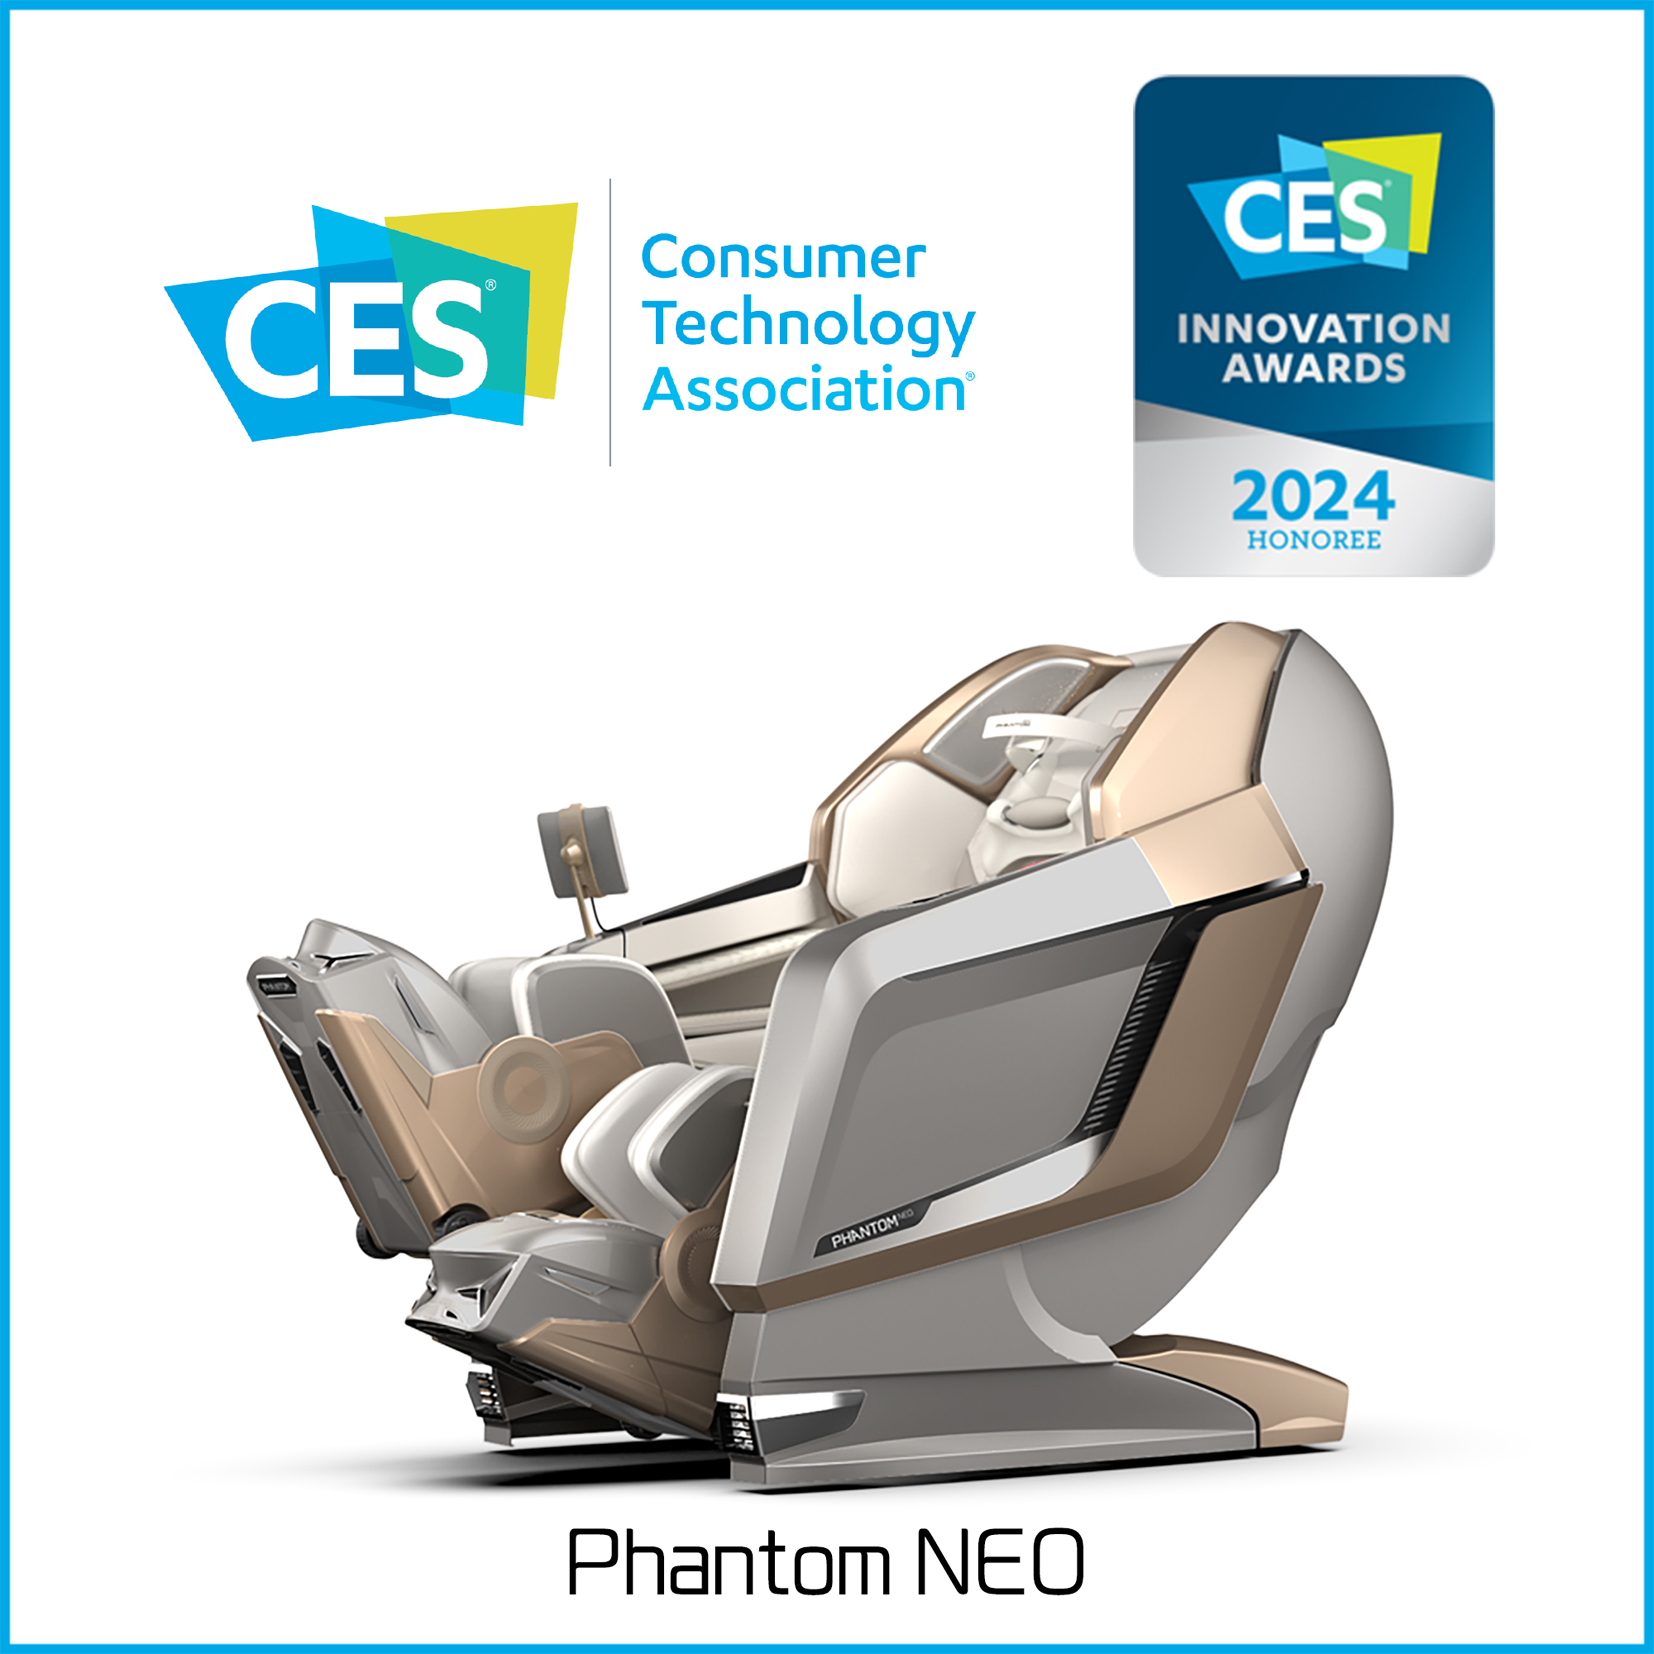 ‘CES 2024’ 혁신상(Innovation Award) 수상작인 팬텀네오(Phantom Neo) 제품. [사진 바디프랜드] 